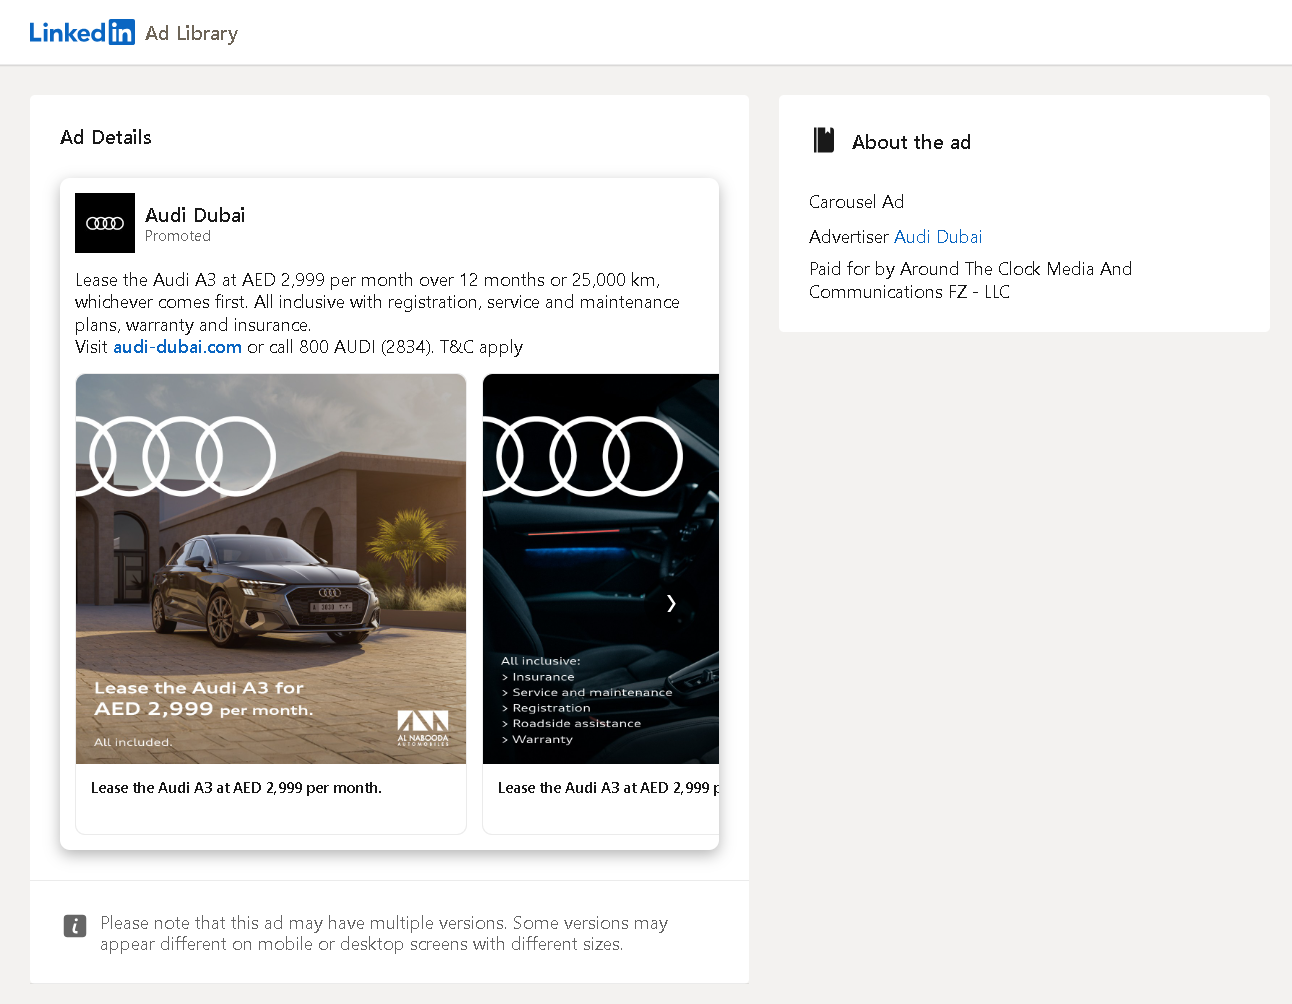 LinkedIn Carousel Ad Examples: Audi Dubai